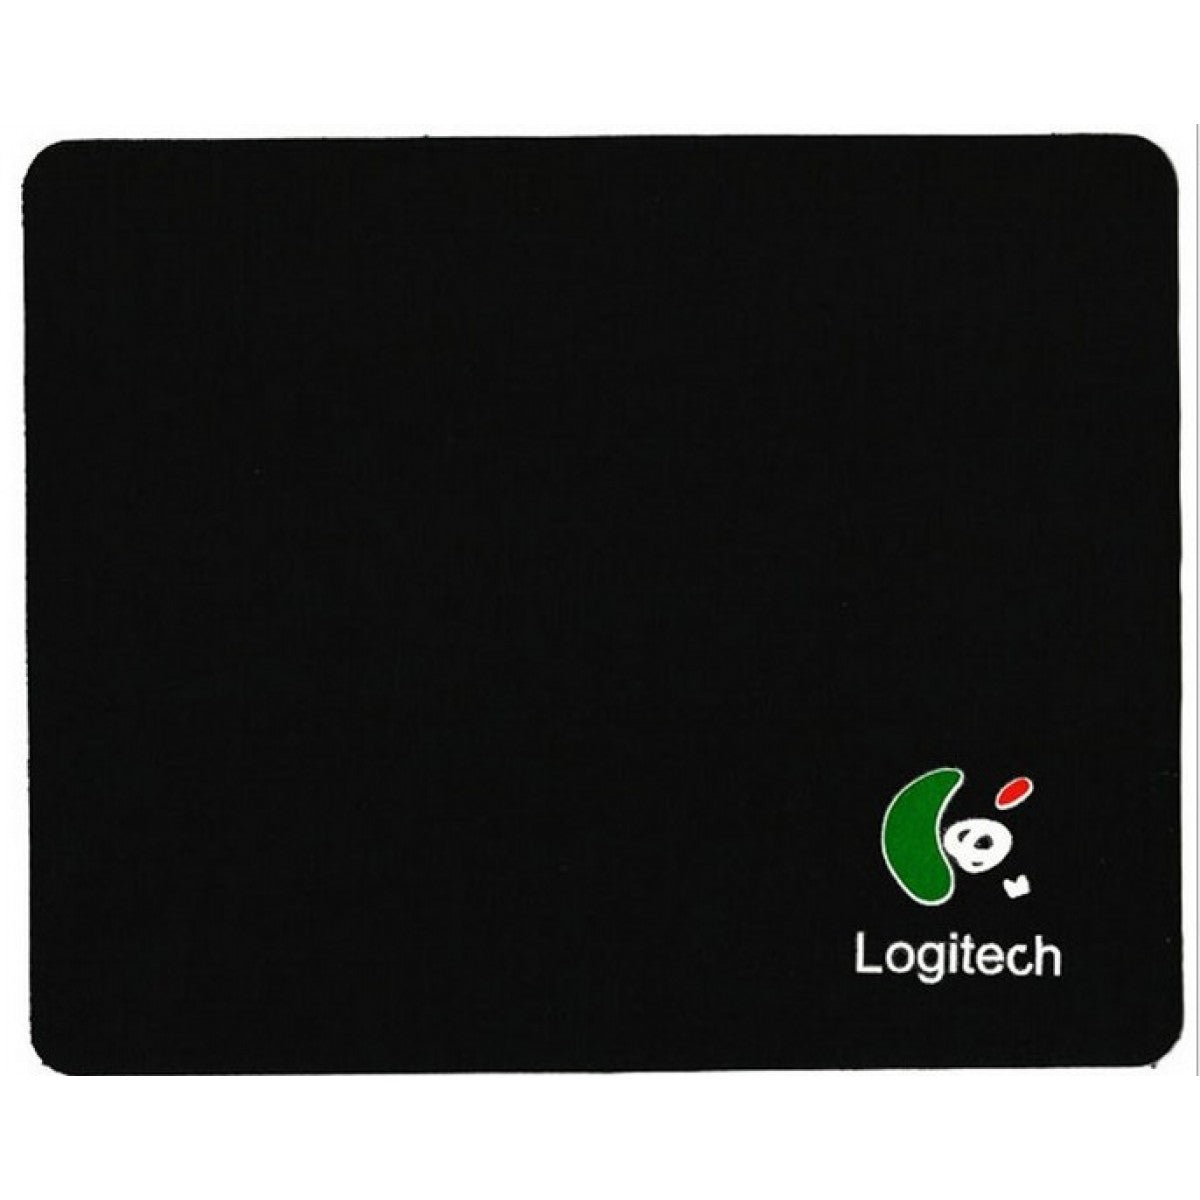 Logitech Mouse Pad Big and Medium Size